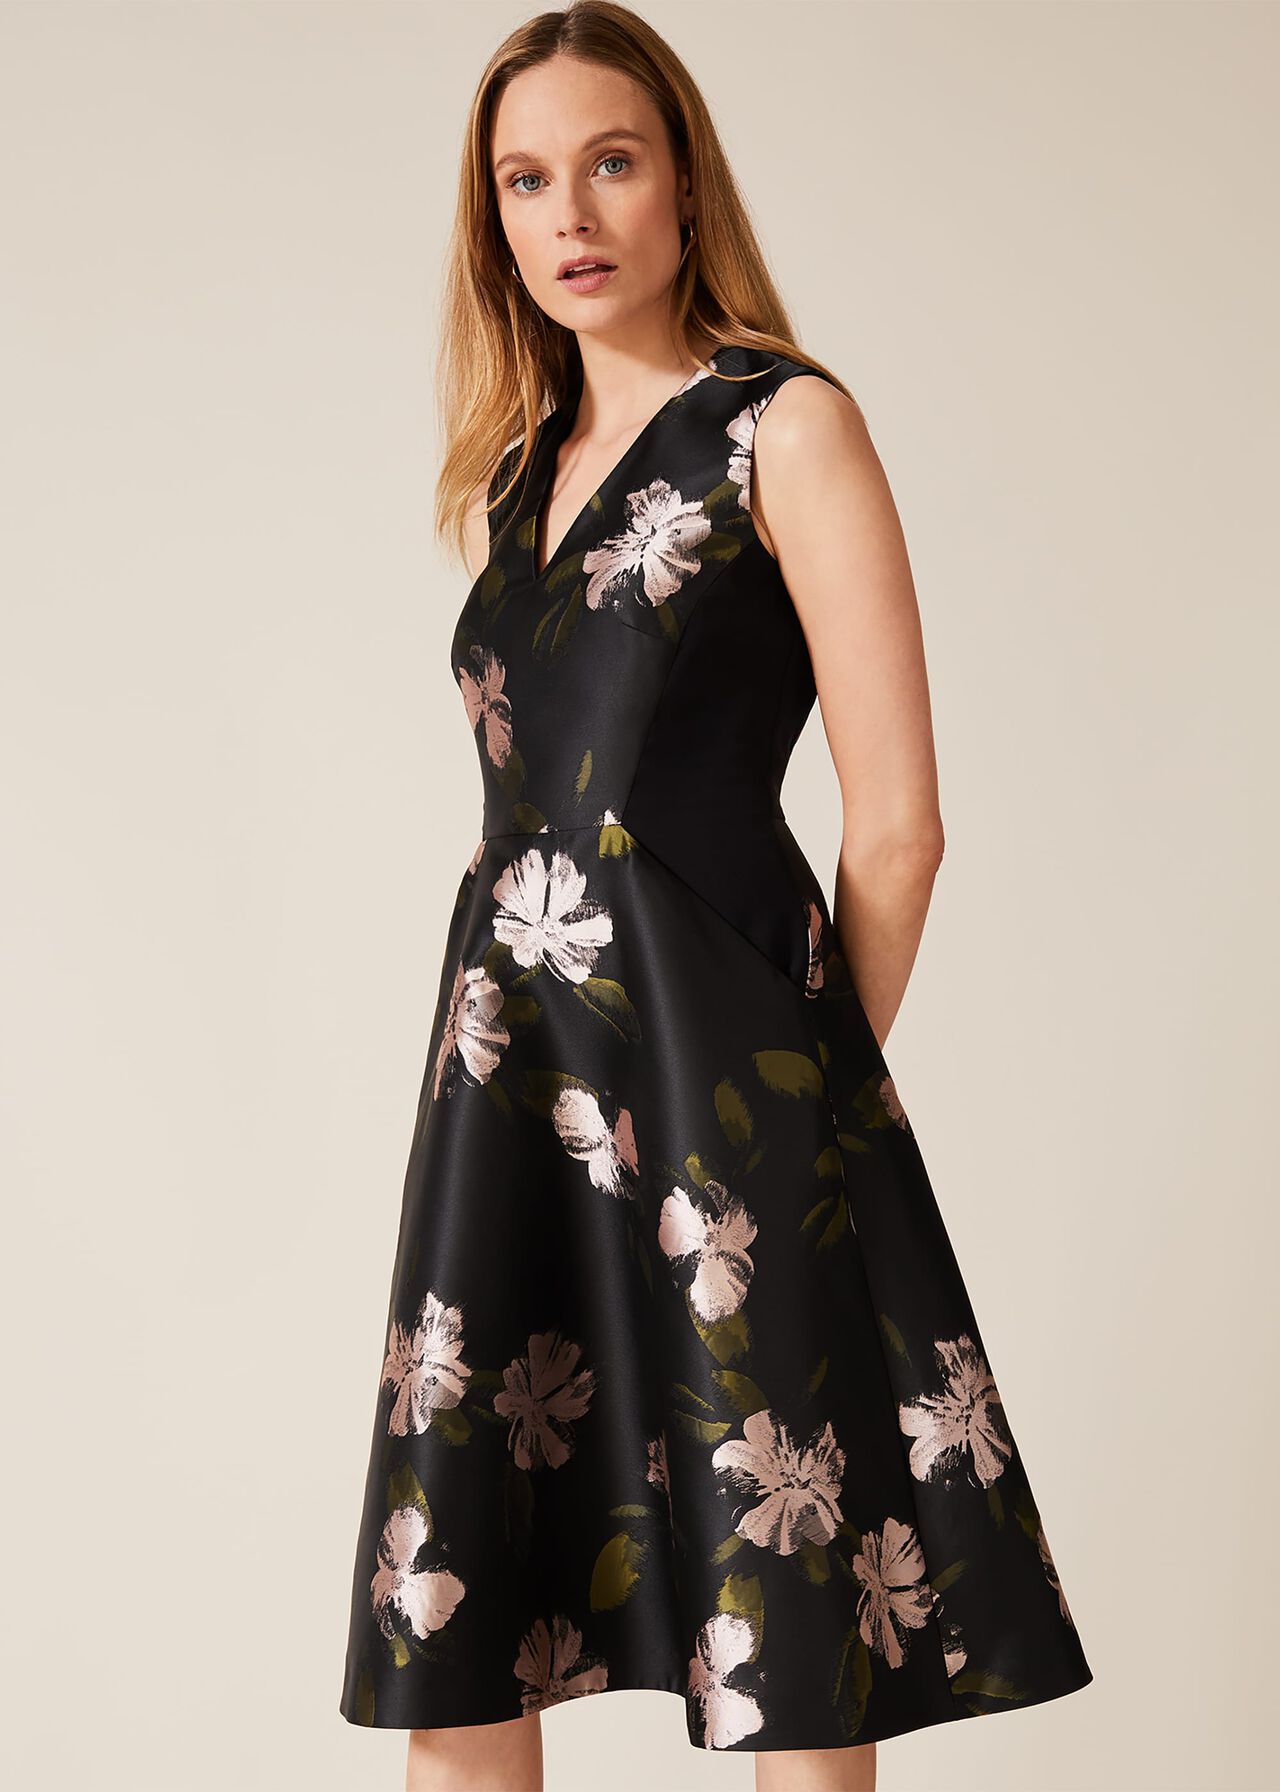 Sandy Floral Jacquard Dress | Phase Eight UK